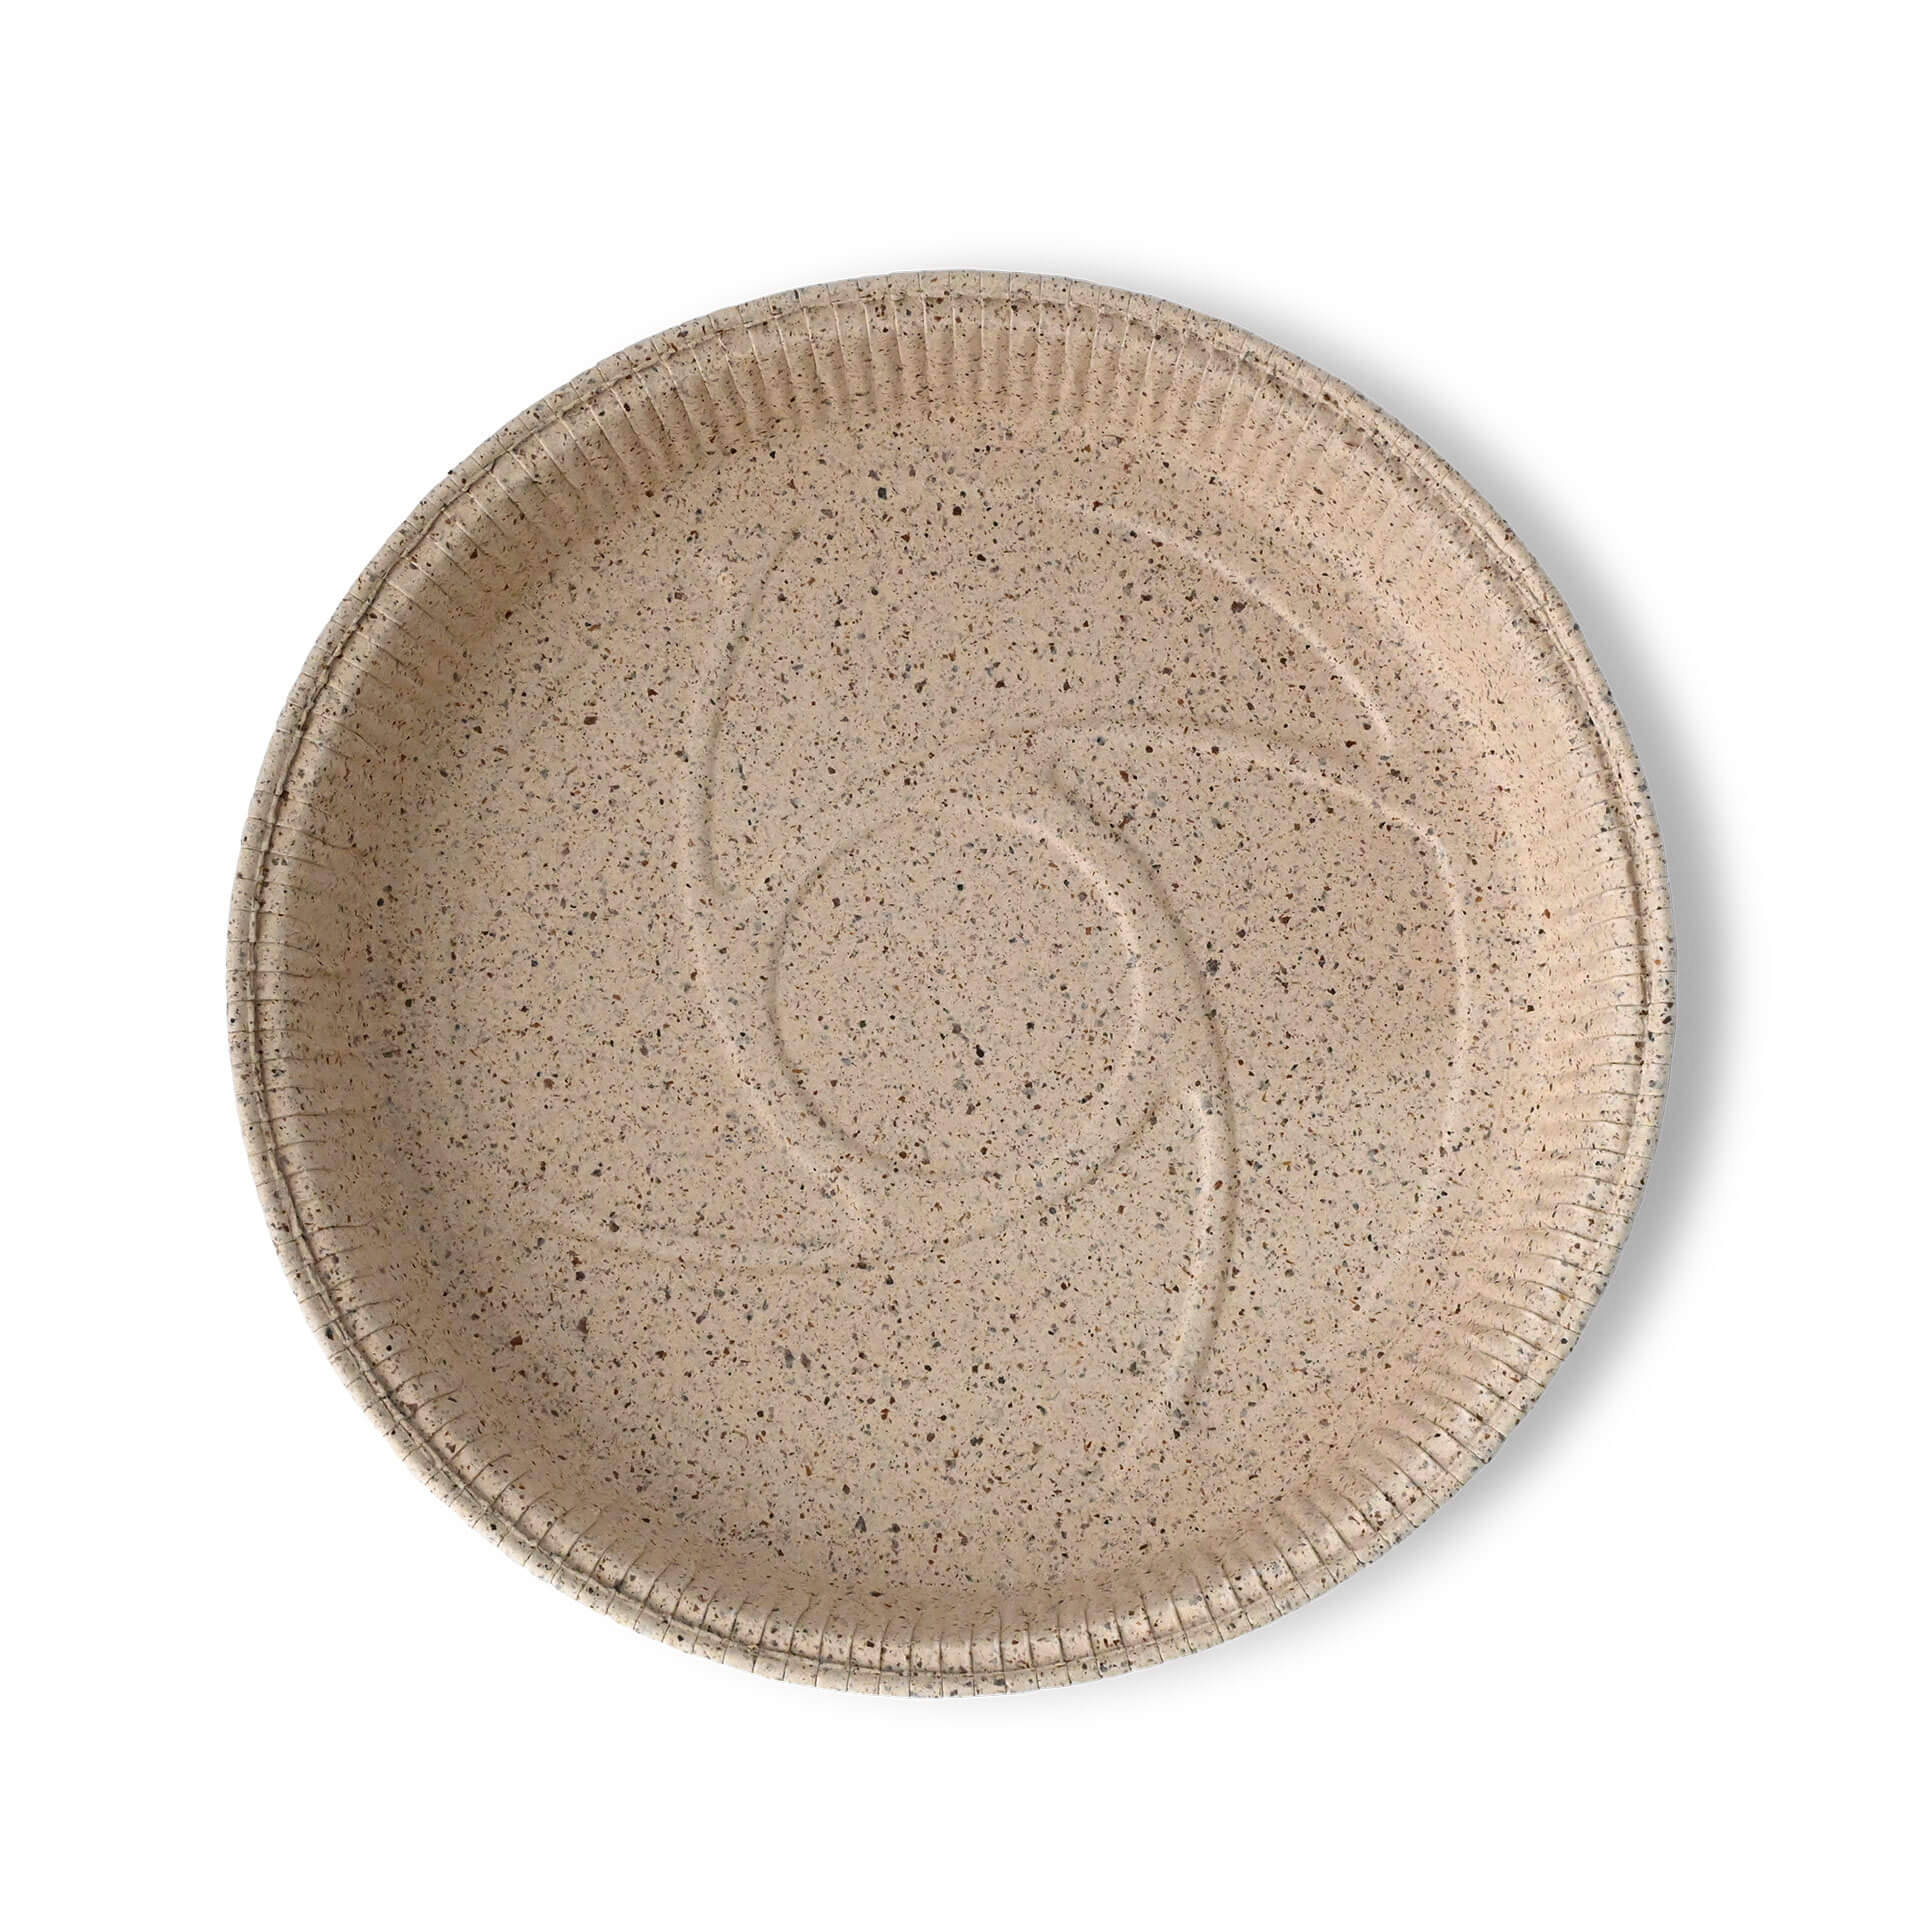 Kakaopapier-Backformen Ø 18 cm, rund, braun